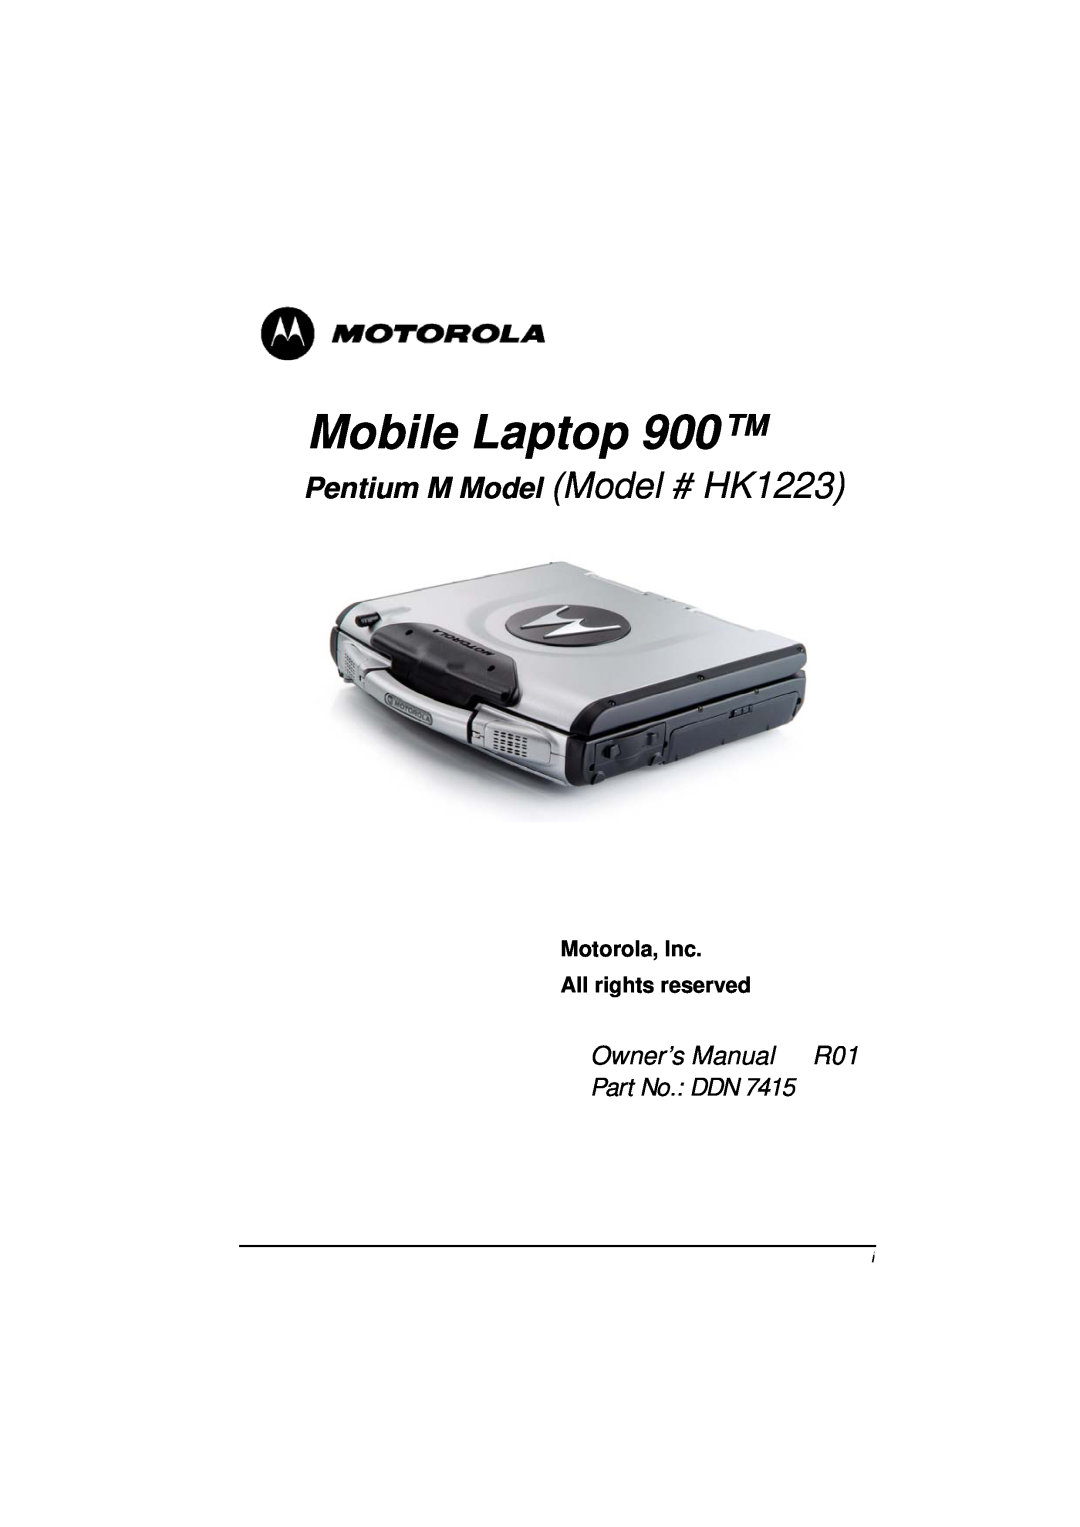 Casio owner manual Mobile Laptop, Motorola, Inc All rights reserved, Pentium M Model Model # HK1223, Part No. DDN 